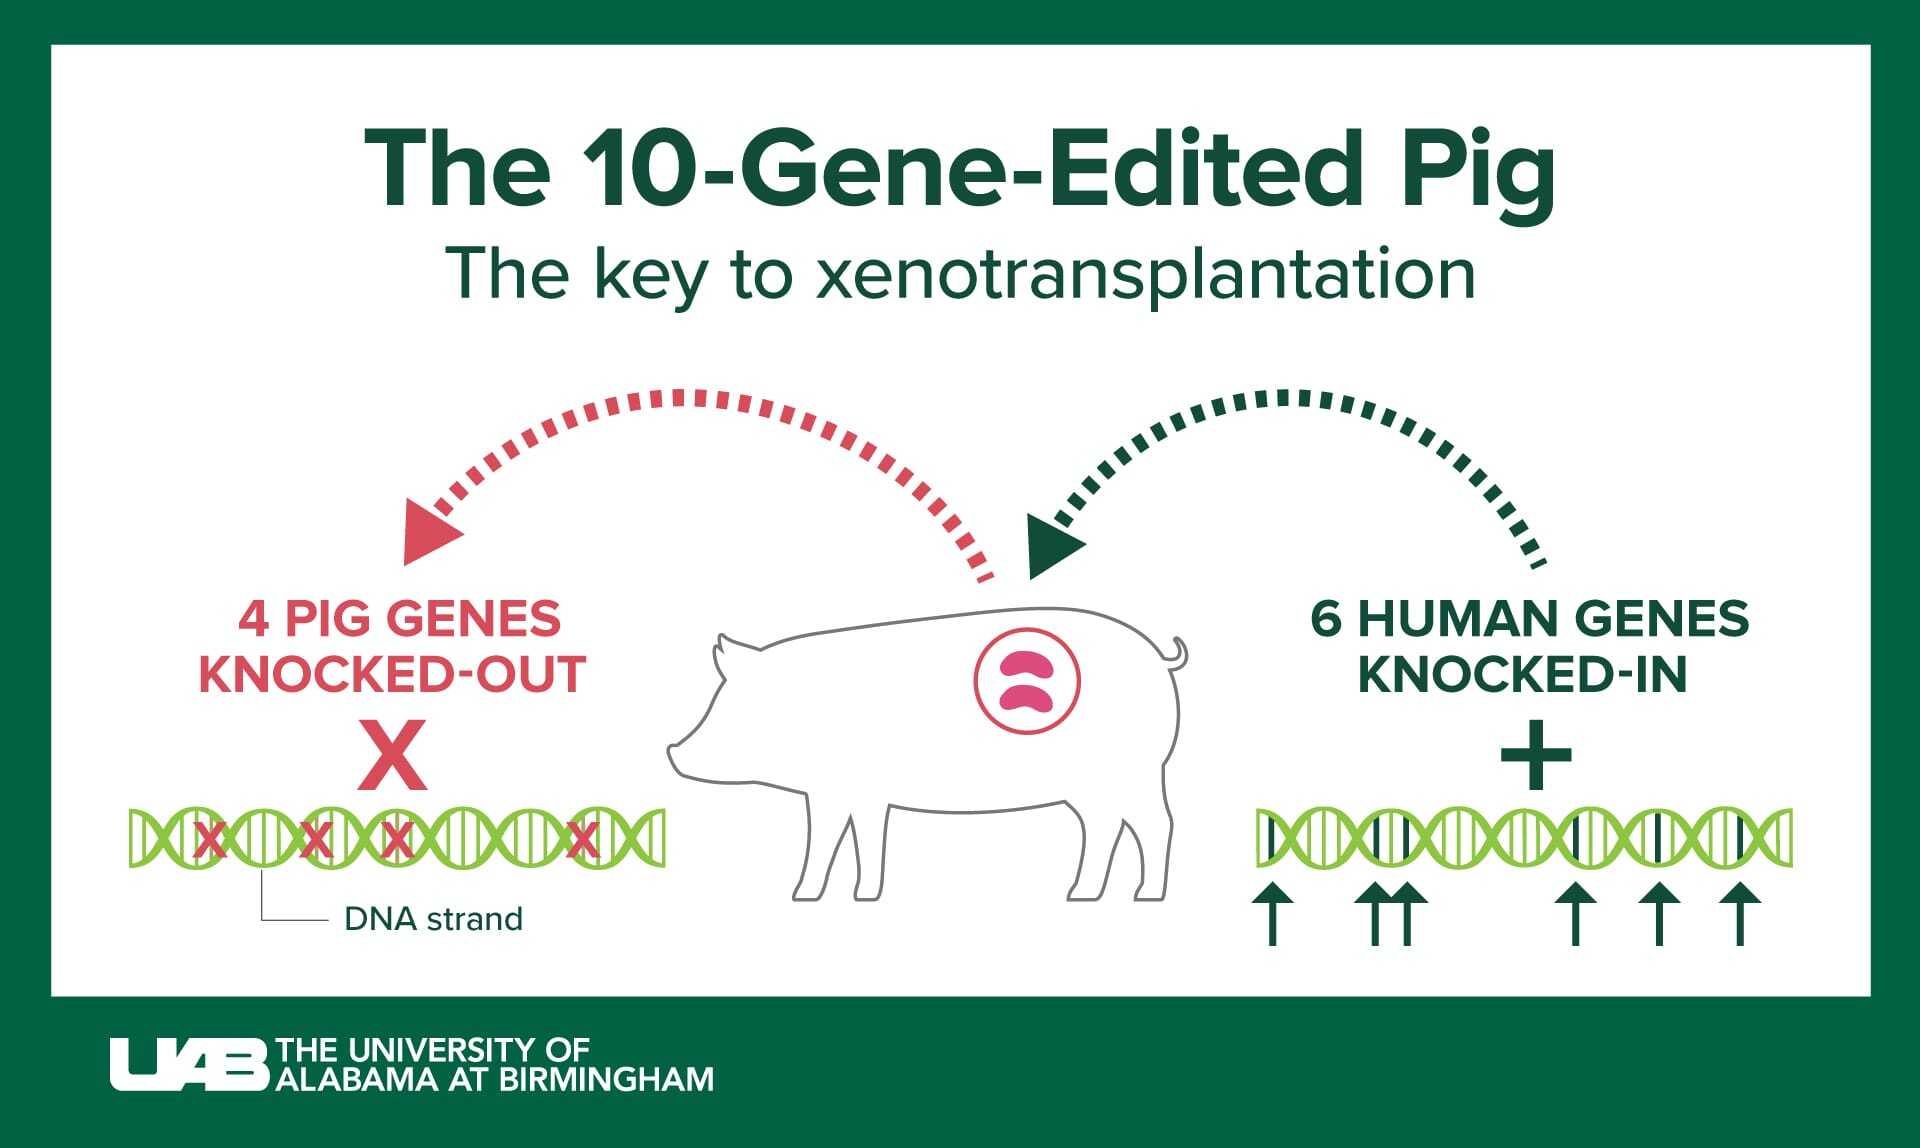 The 10-gene edited pig